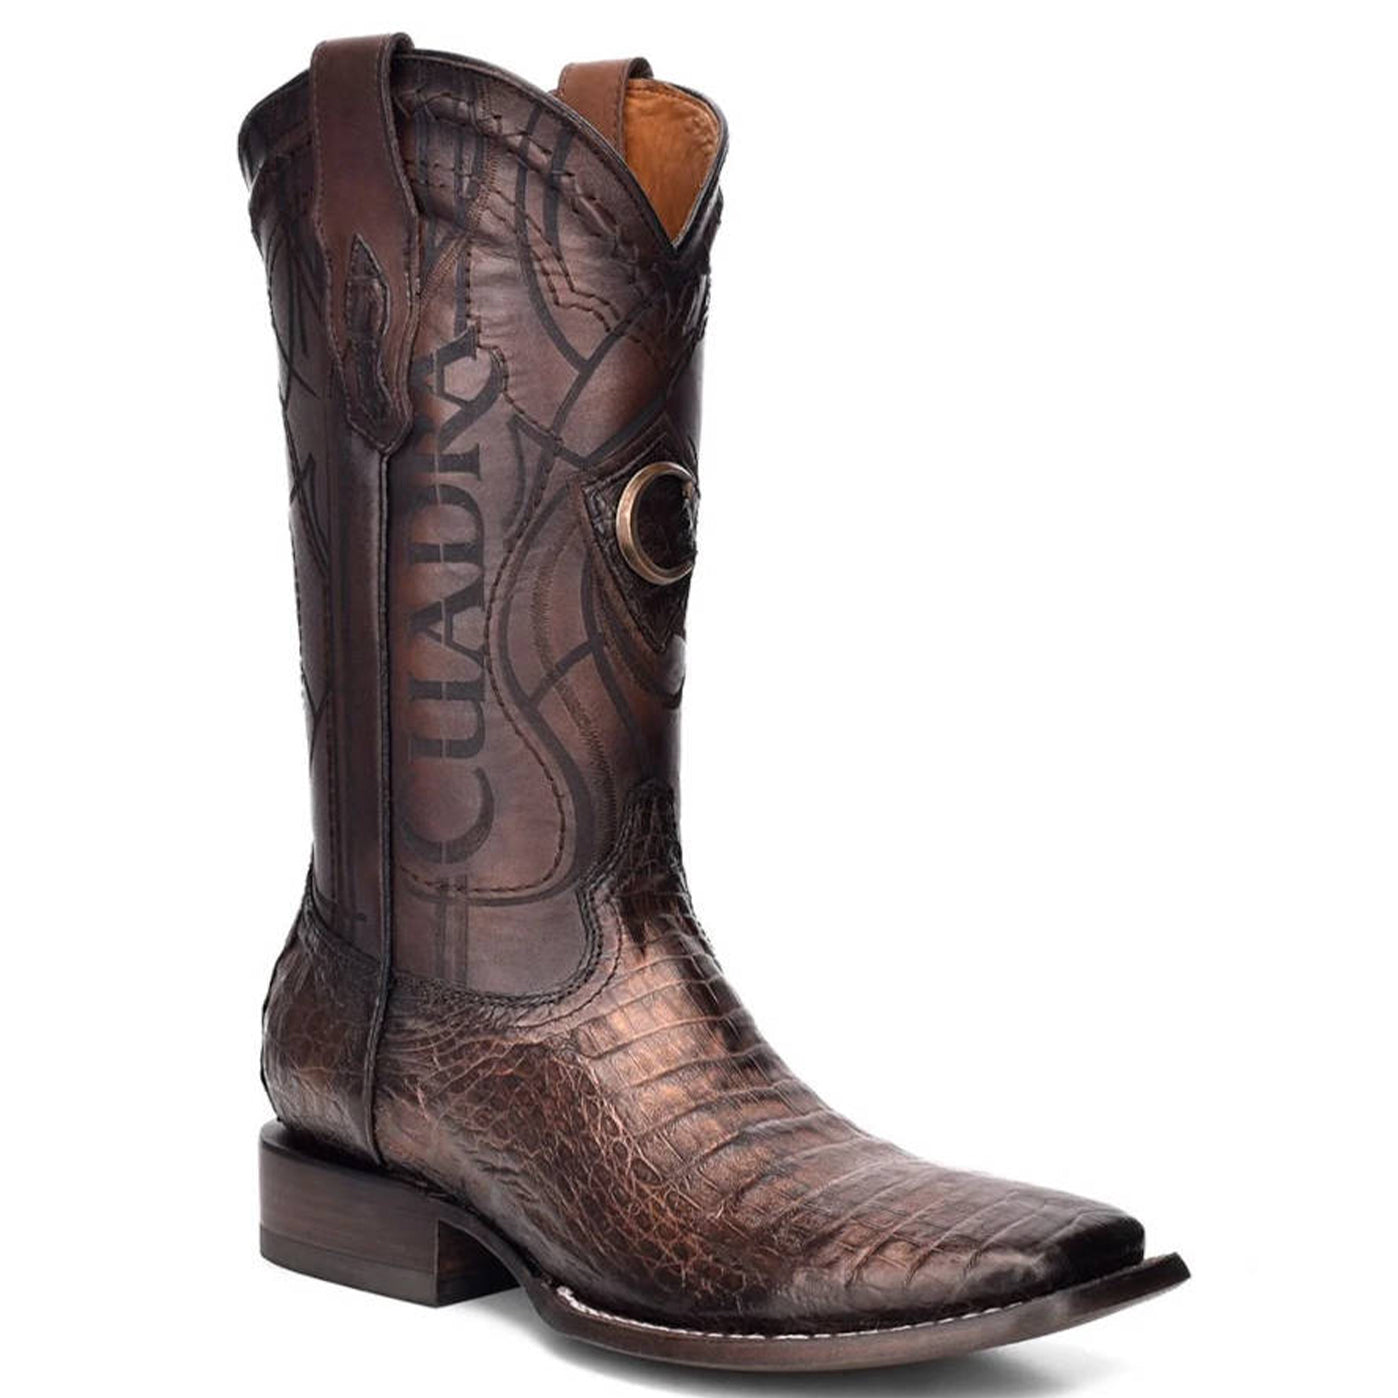 Mens cowboy boots by Cuadra Boots